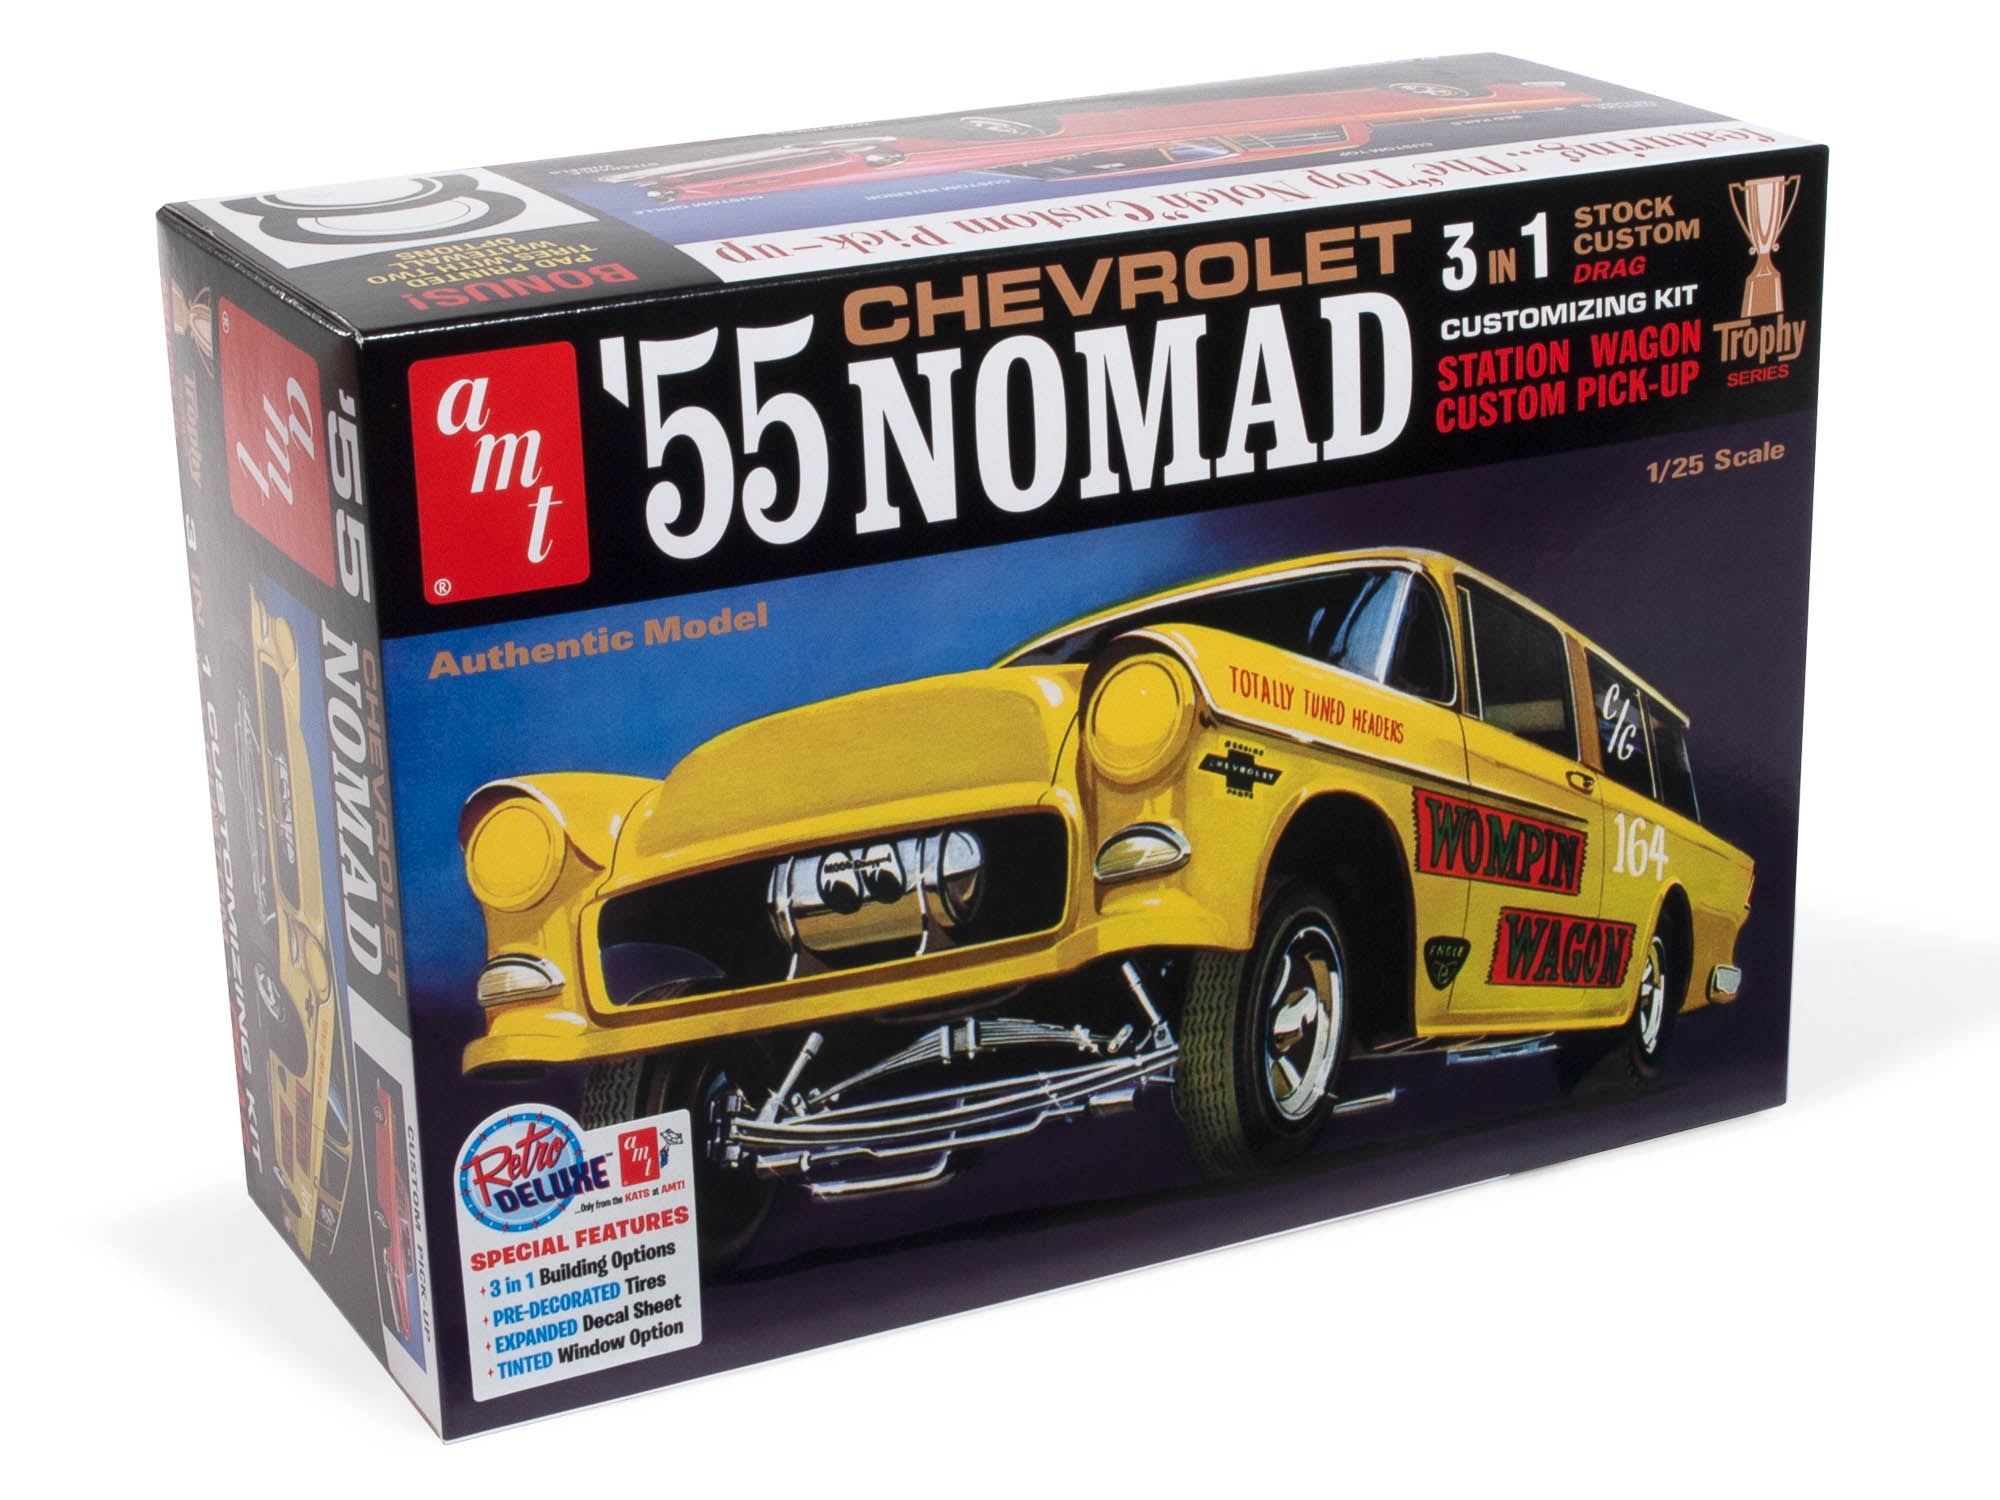 Chevy Model Kit